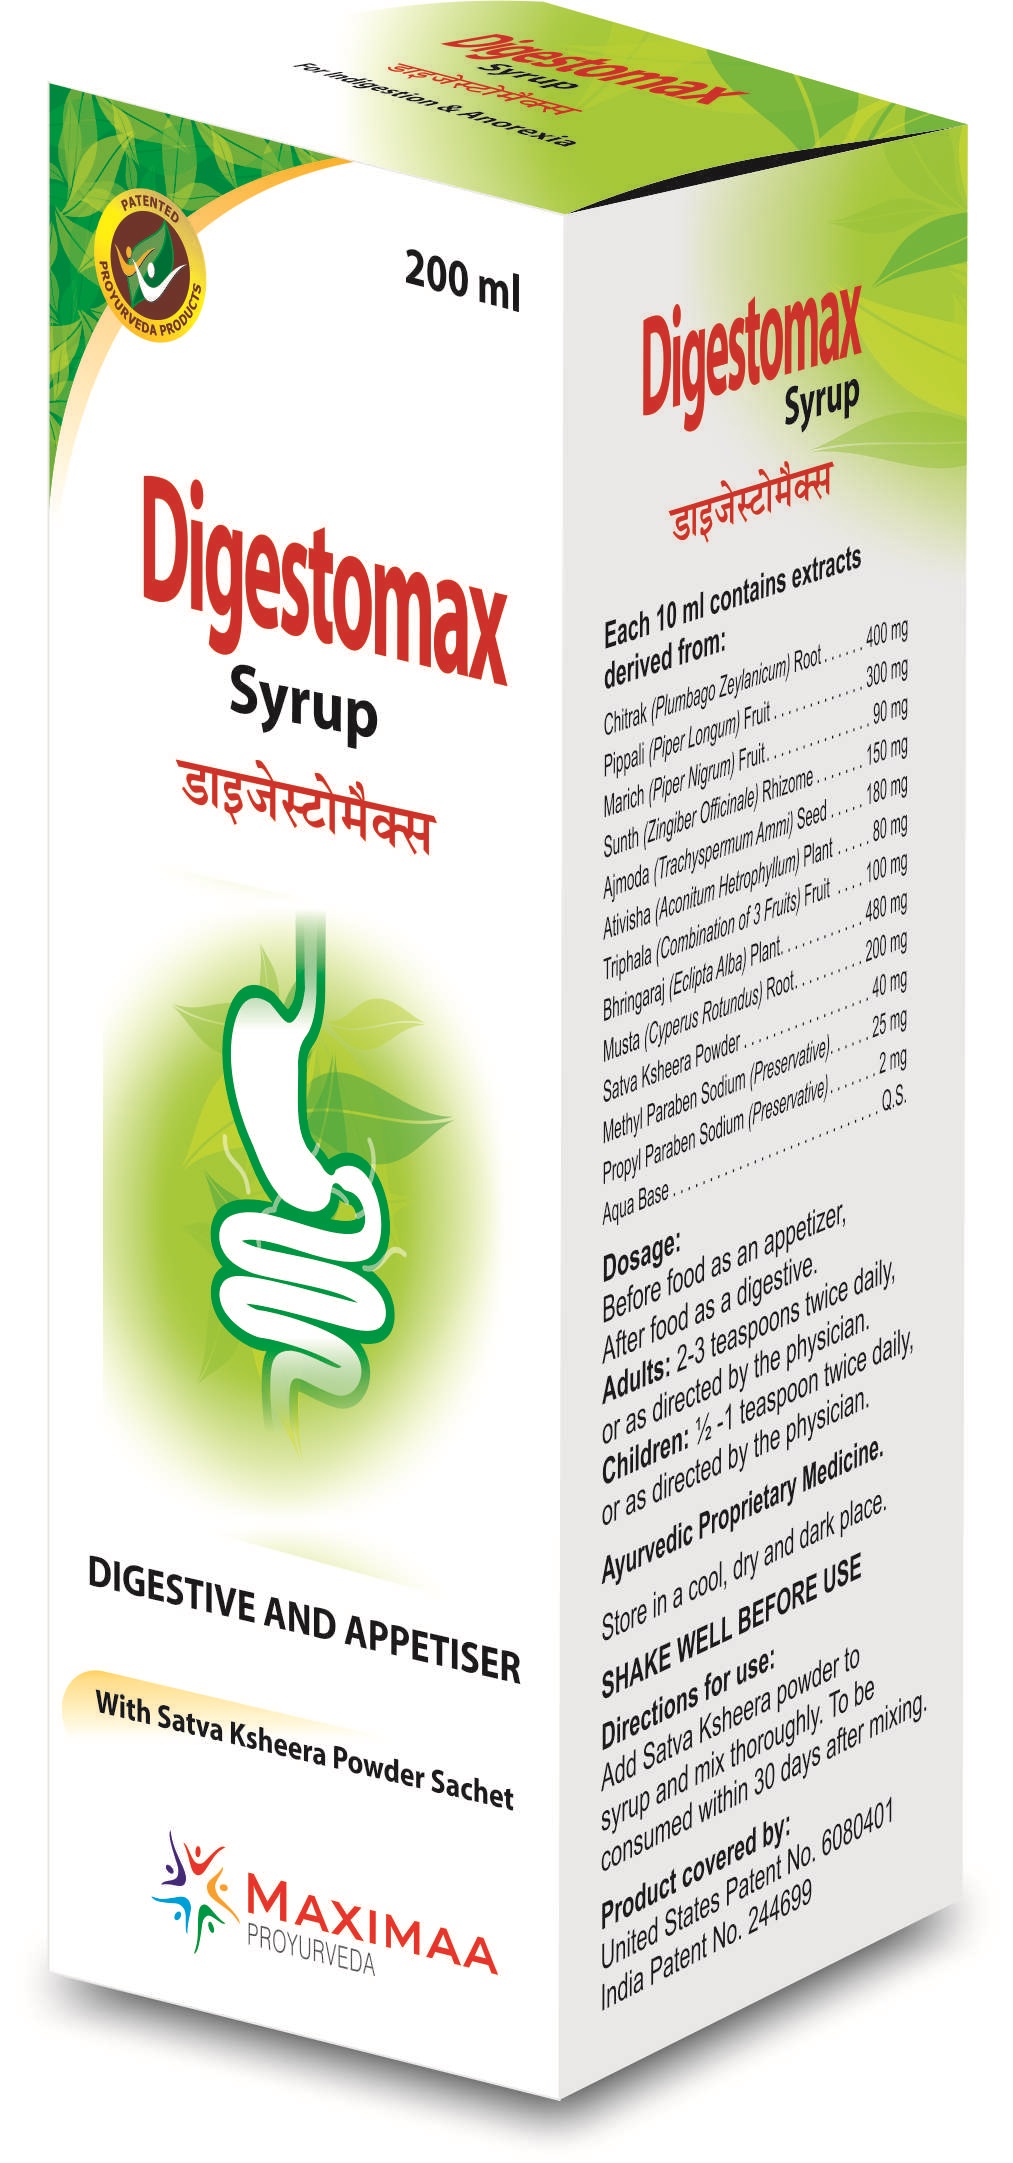 Buy Essenzaa Digestomax Syrup (Maximaa Proyurveda Digestomax Syrup) at Best Price Online